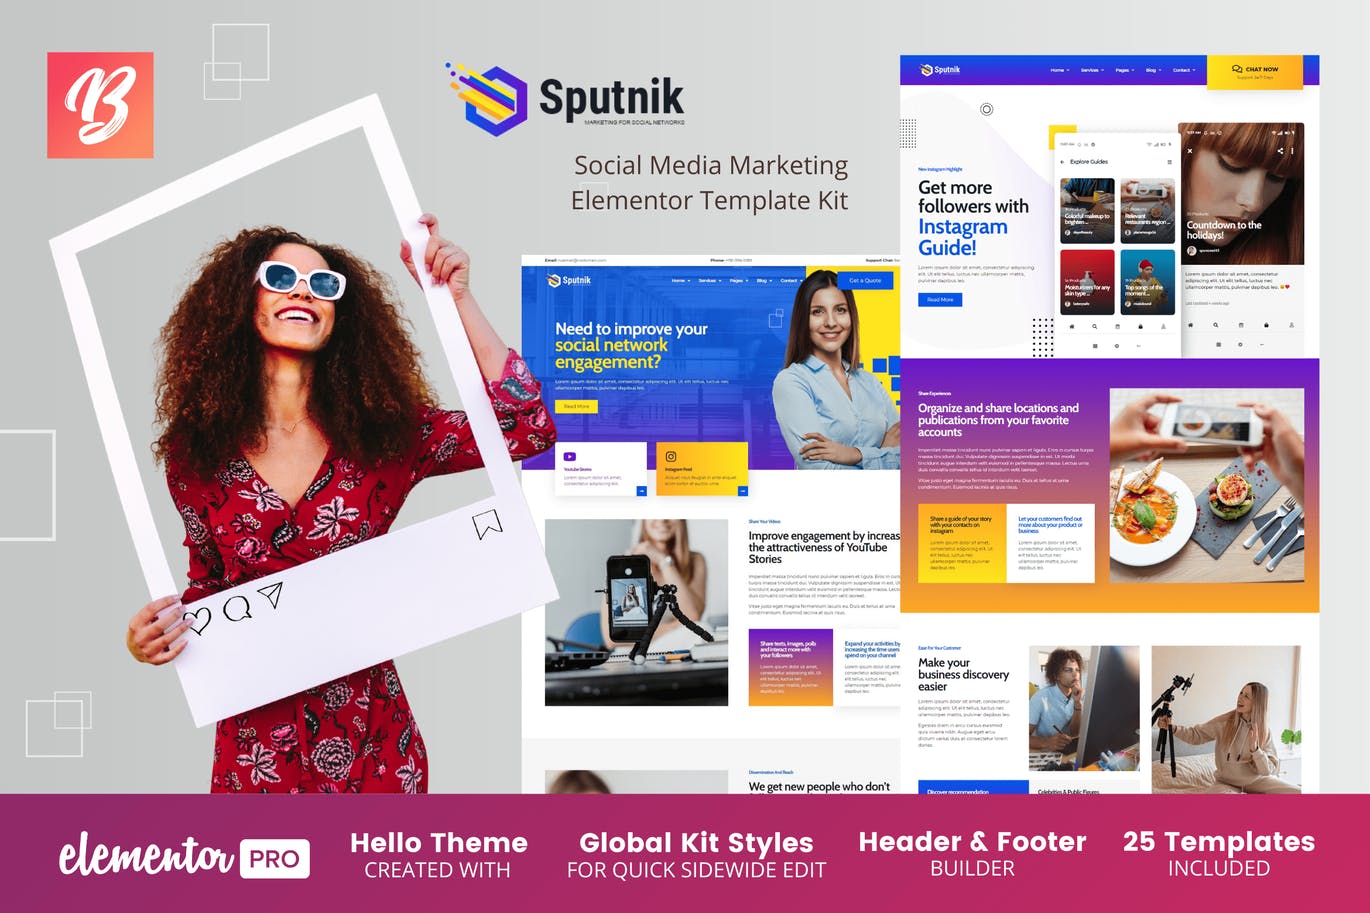 Sputnik – 社交媒体营销 Elementor Template Kit